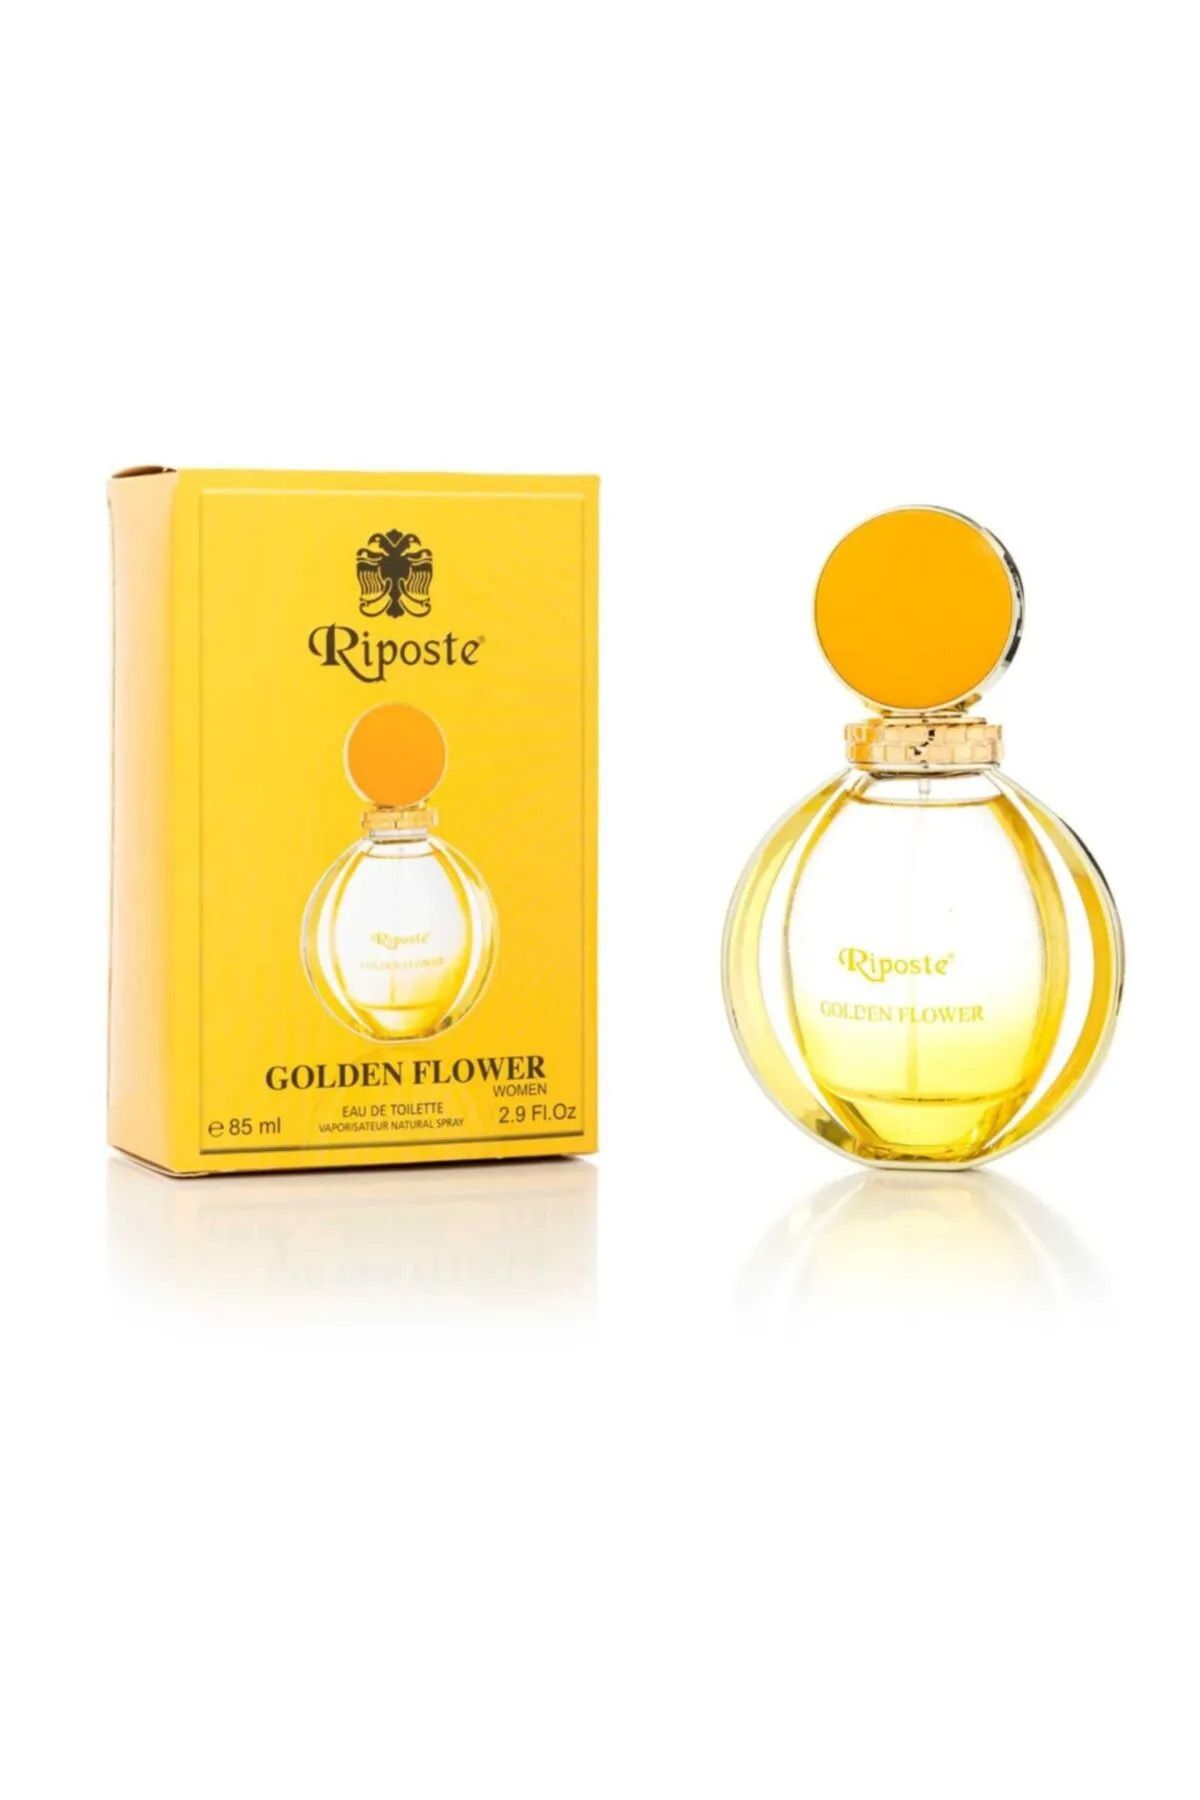 TREND Riposte 24 Saat Etkili Kadın Parfüm - Golden Flower - For Women 85 Ml